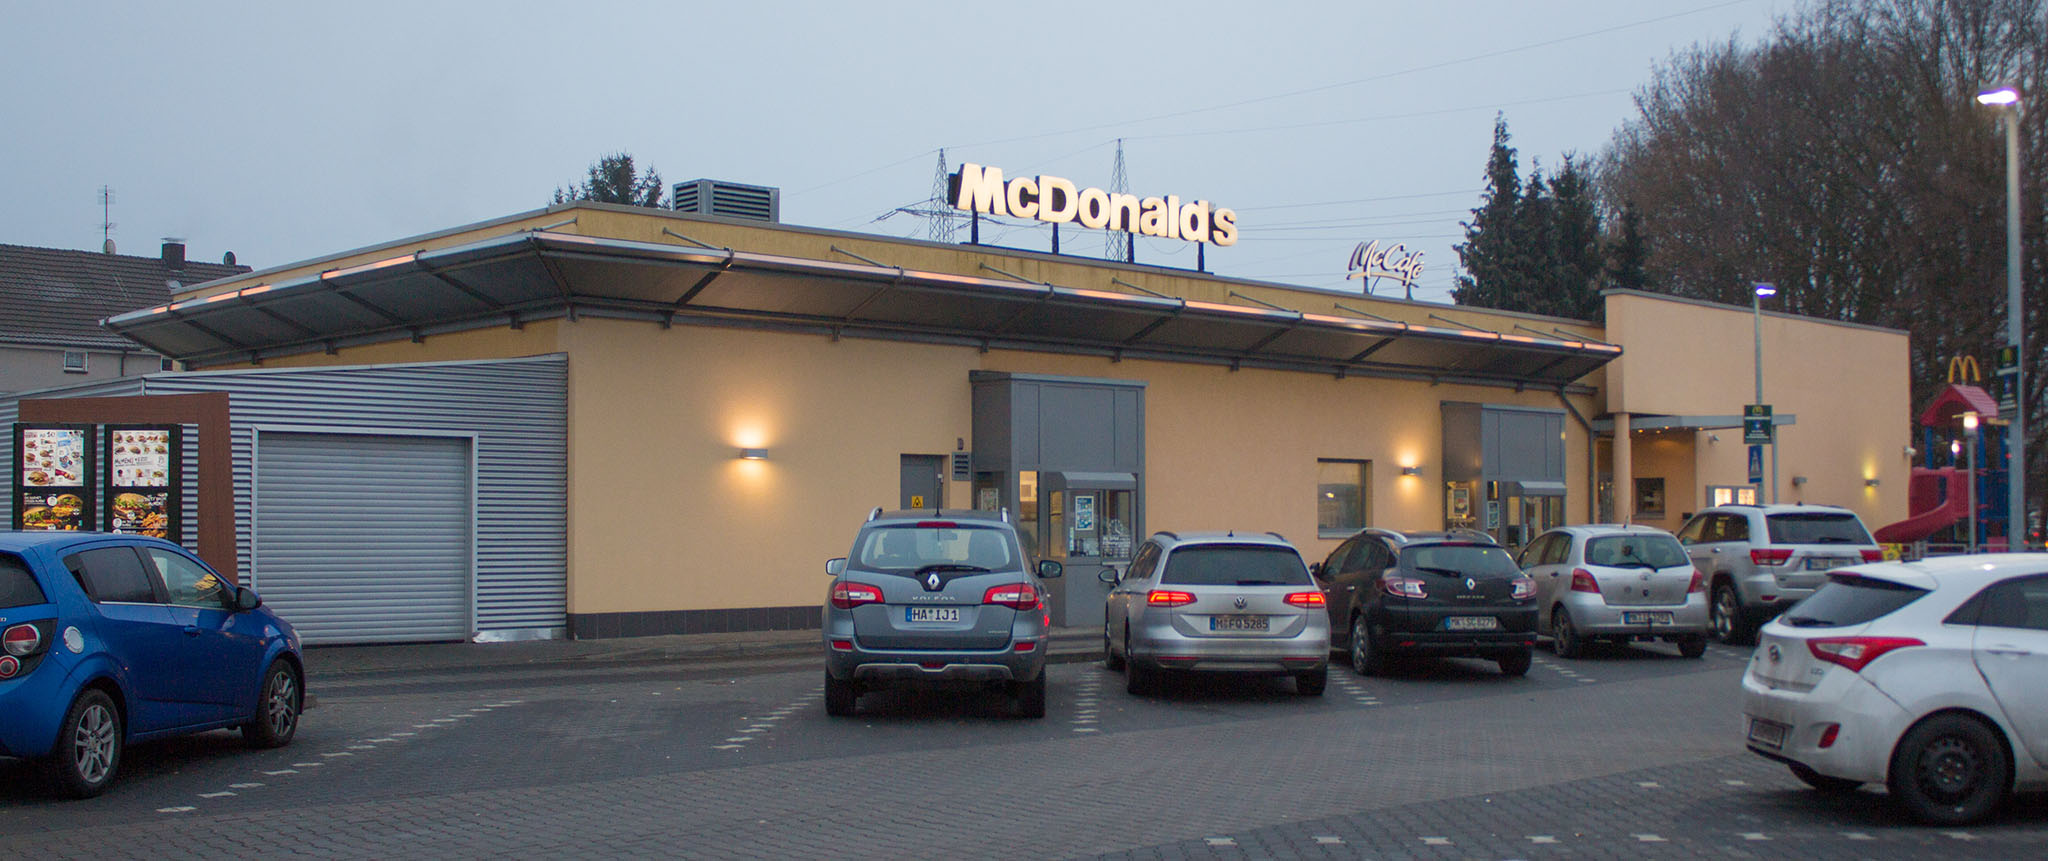 Das McDonald’s-Restaurant in Hagen (Alter Reher Weg)